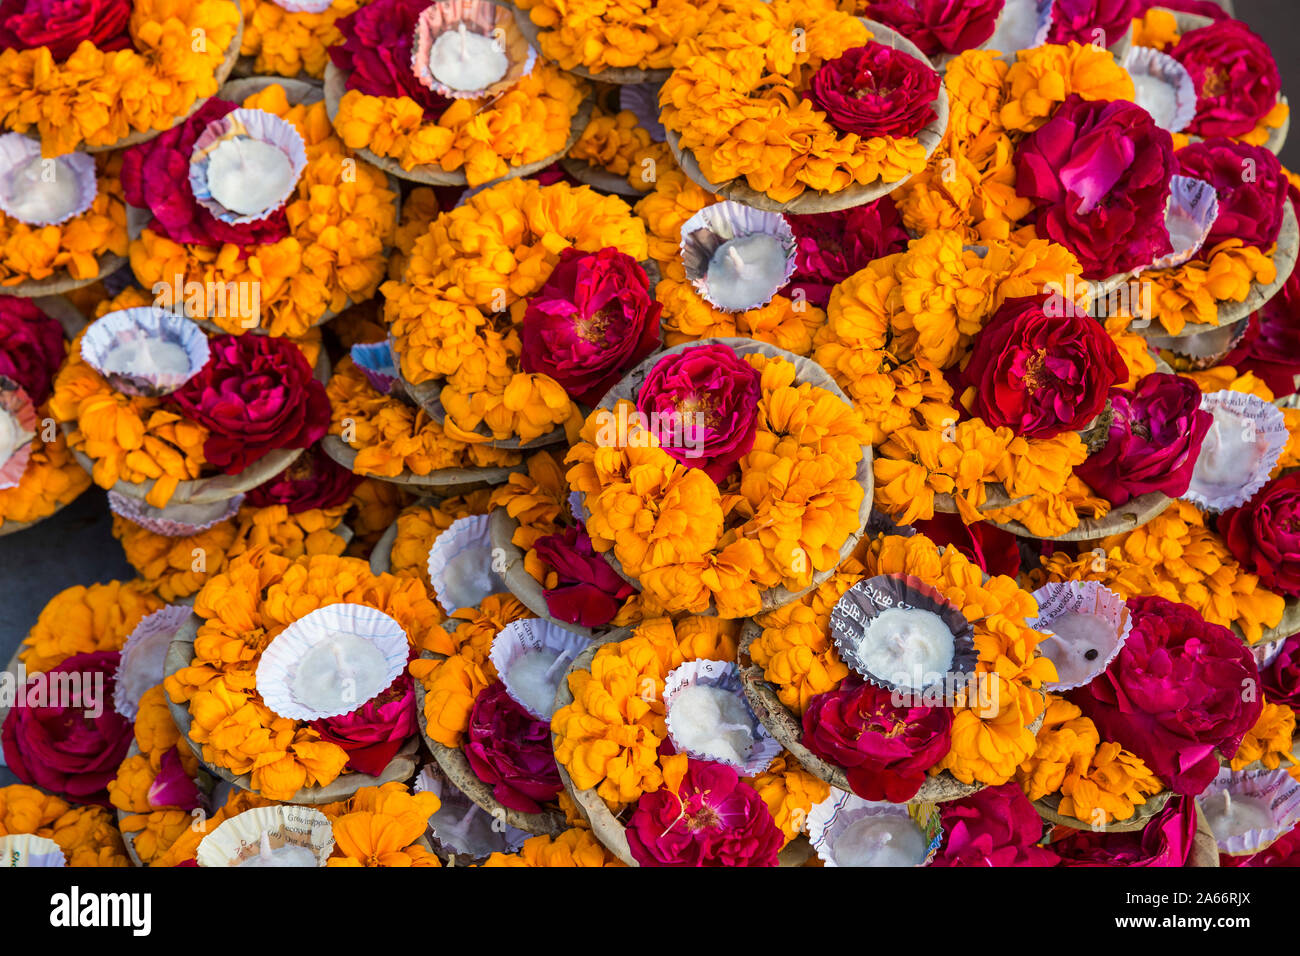 India, Uttar Pradesh, Varanasi, Flower offerings at Dashashwamedh Ghat - The main ghat on the Ganges River Stock Photo